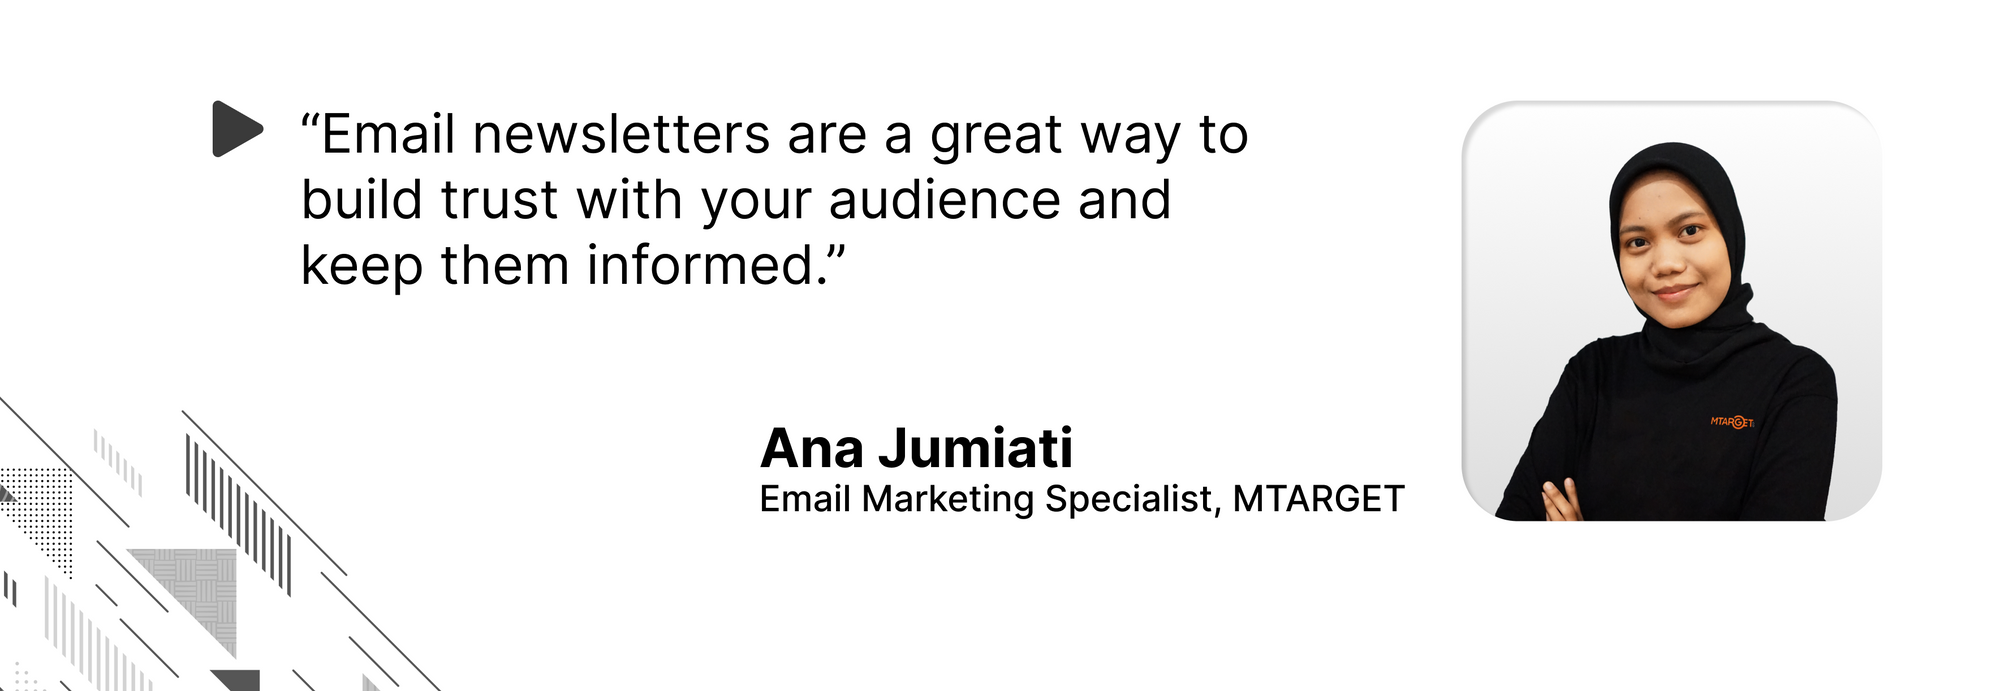 Quote oleh Ana Jumiati mengenai email newsletter yang menjadi cara ampuh untuk membangun customer trust.